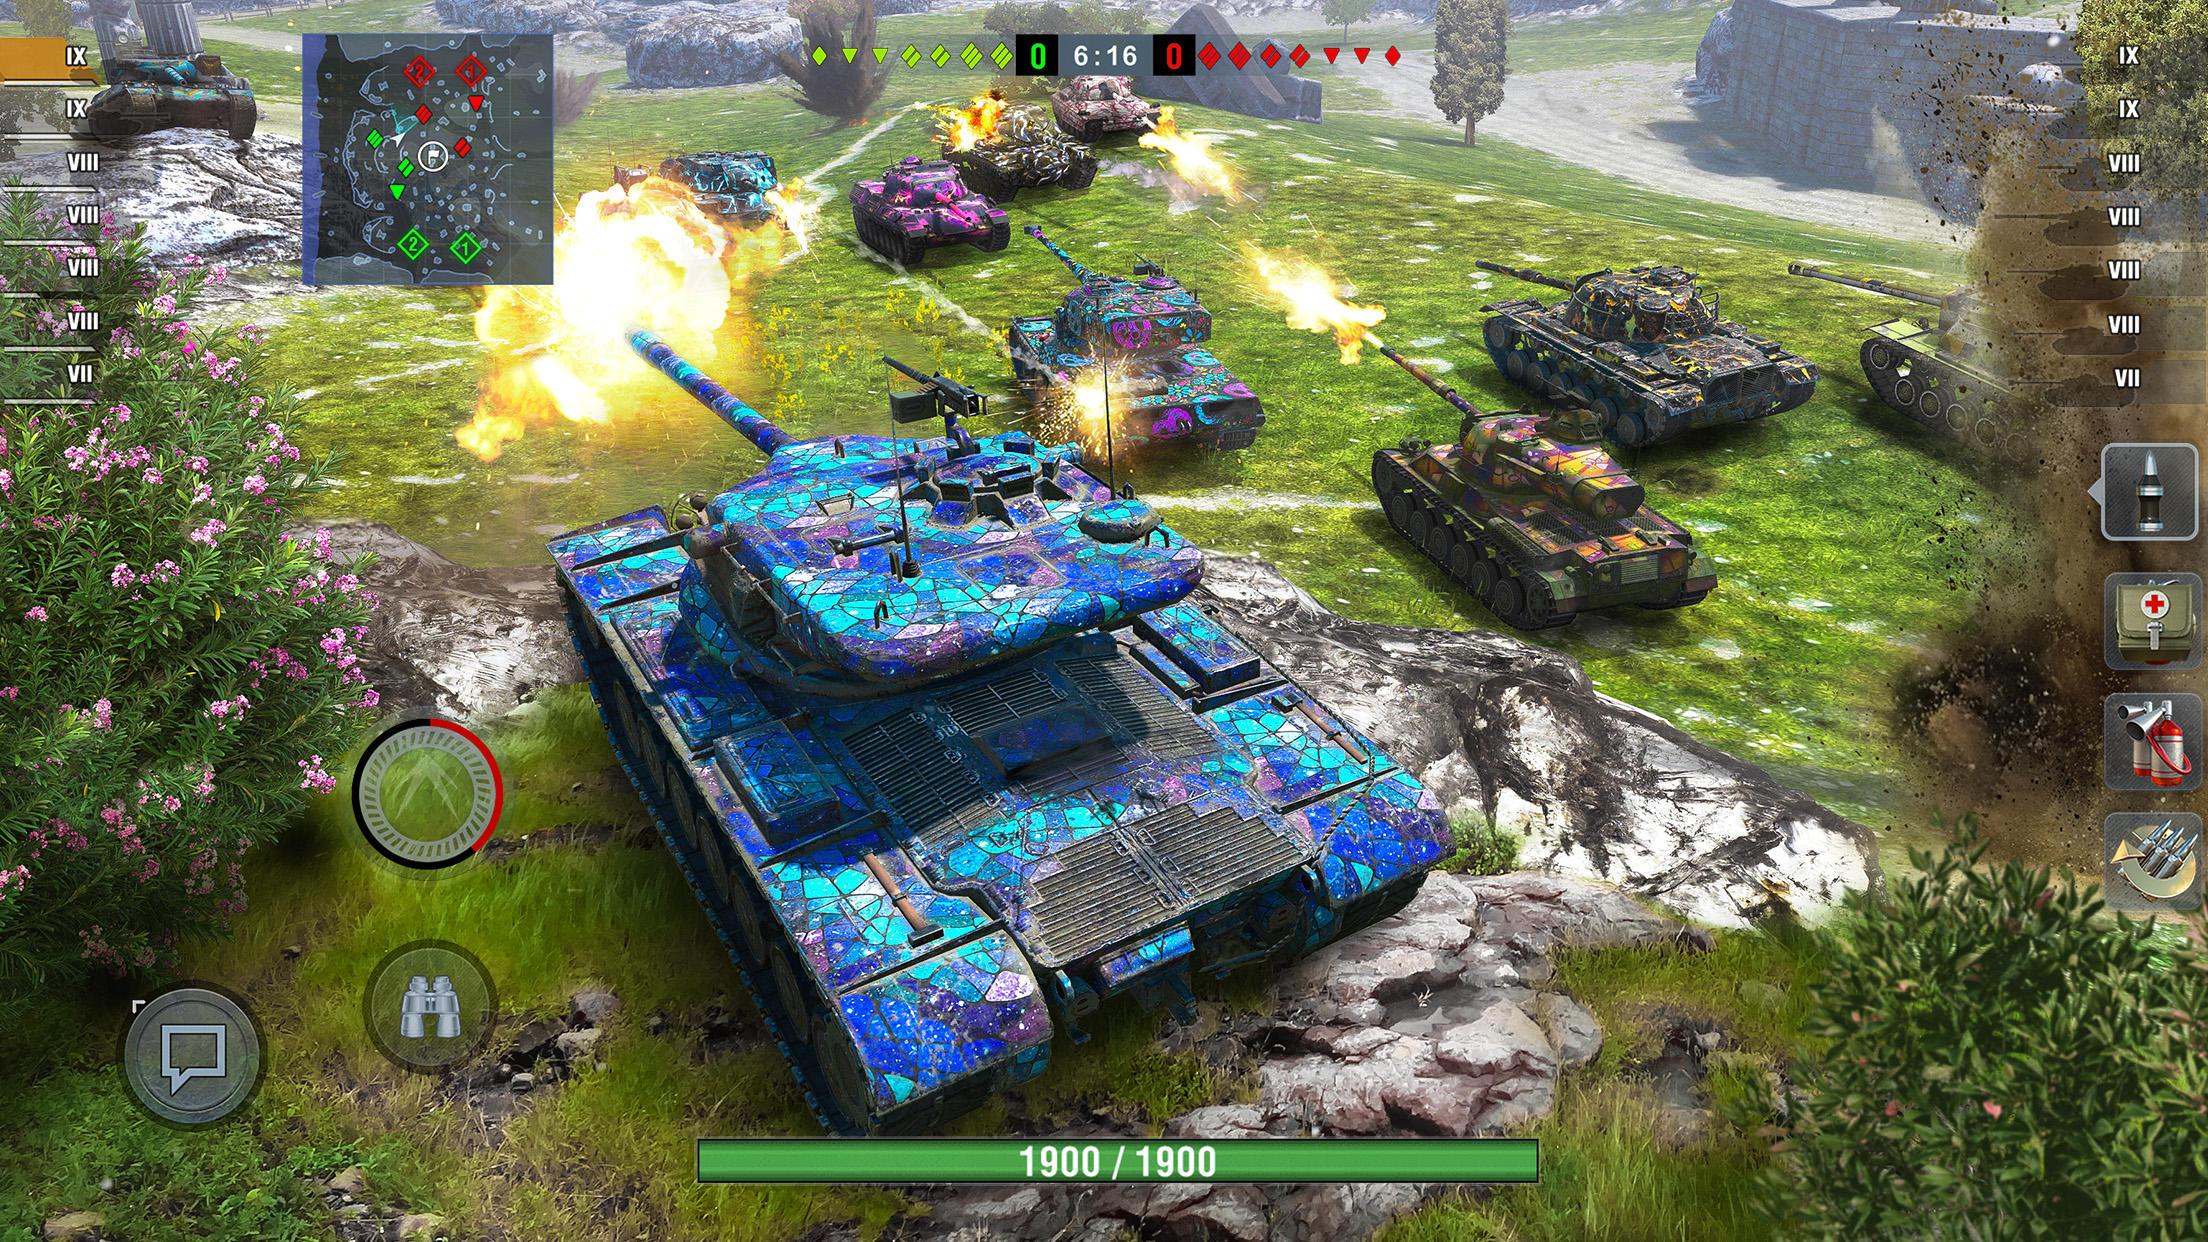 Screenshot 1 of World of Tanks Blitz 11.0.0.516